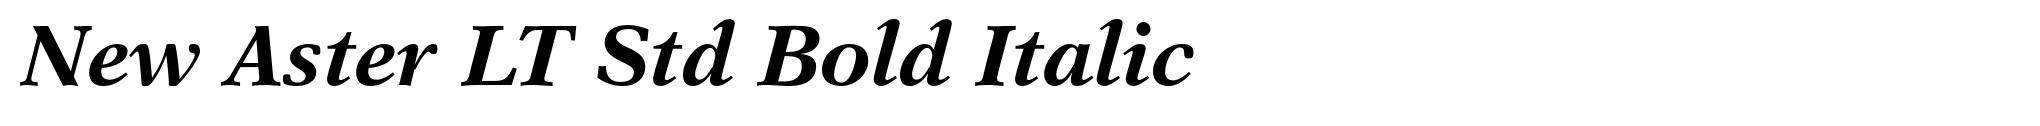 New Aster LT Std Bold Italic image